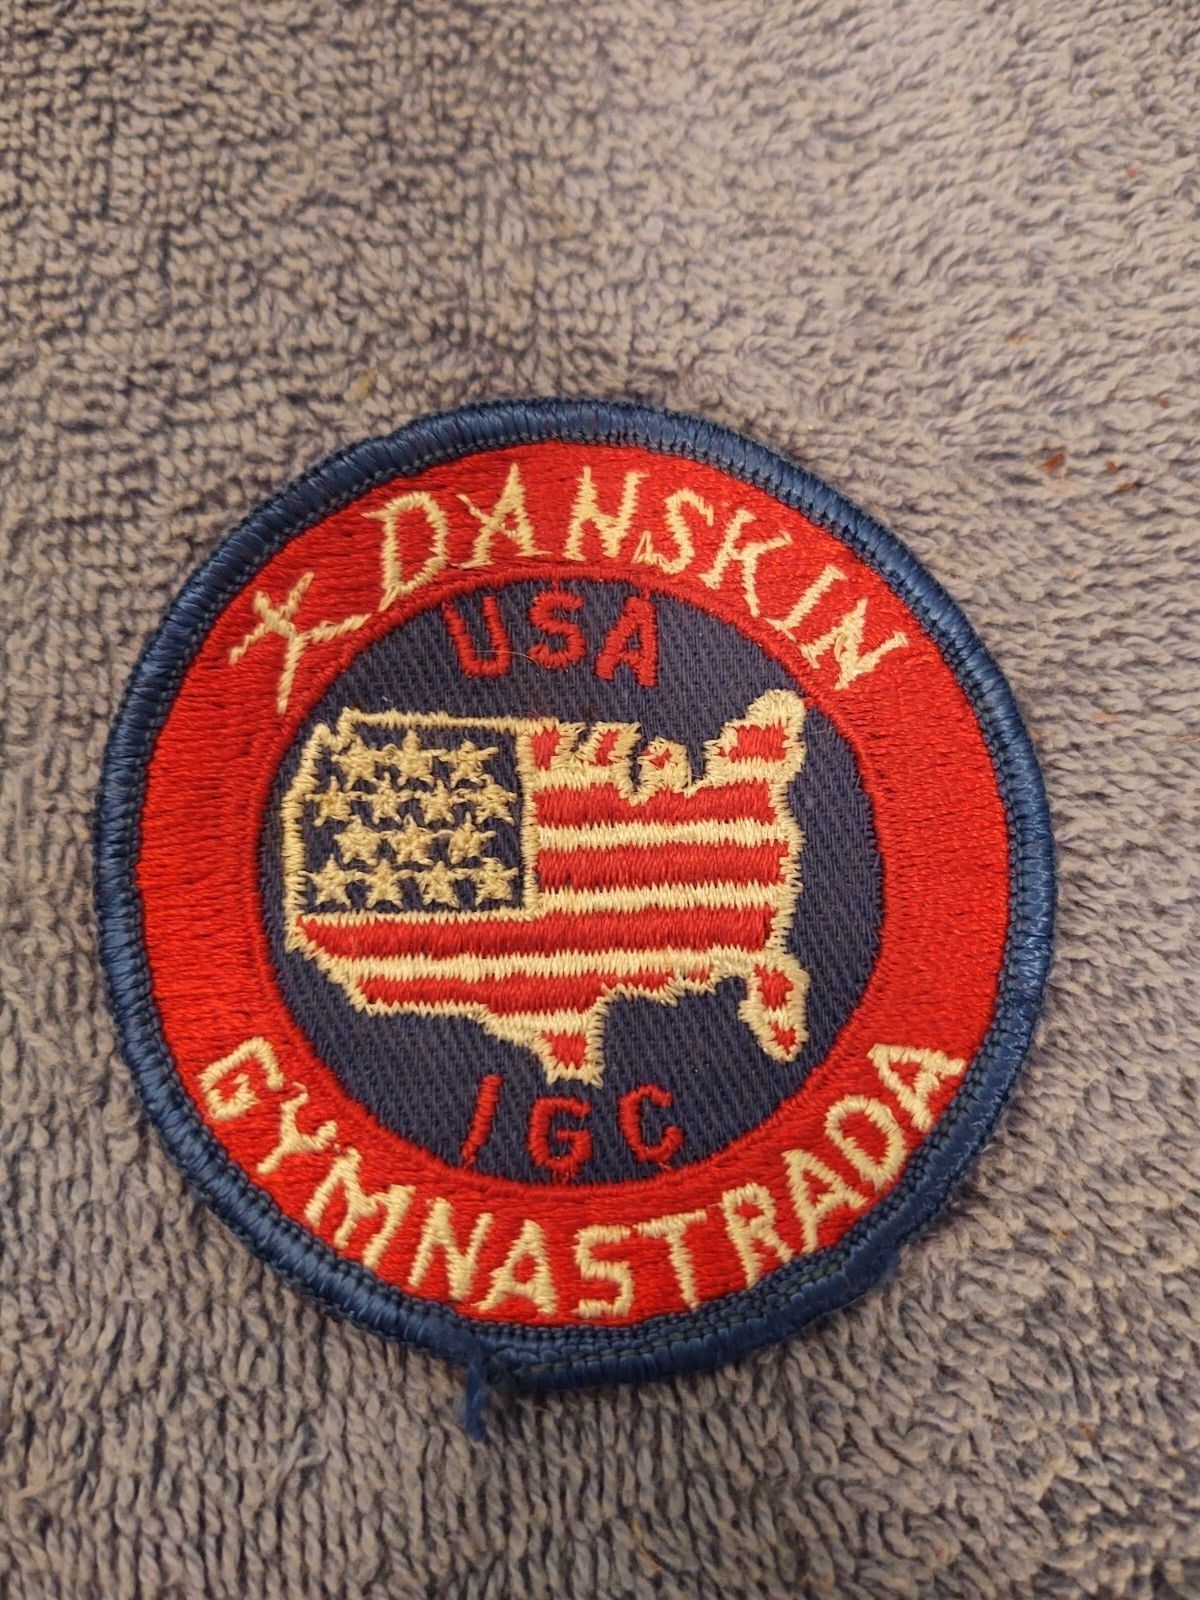 Danskin USA IGC Gymnastrada Gymnastics  Camp woven Patch